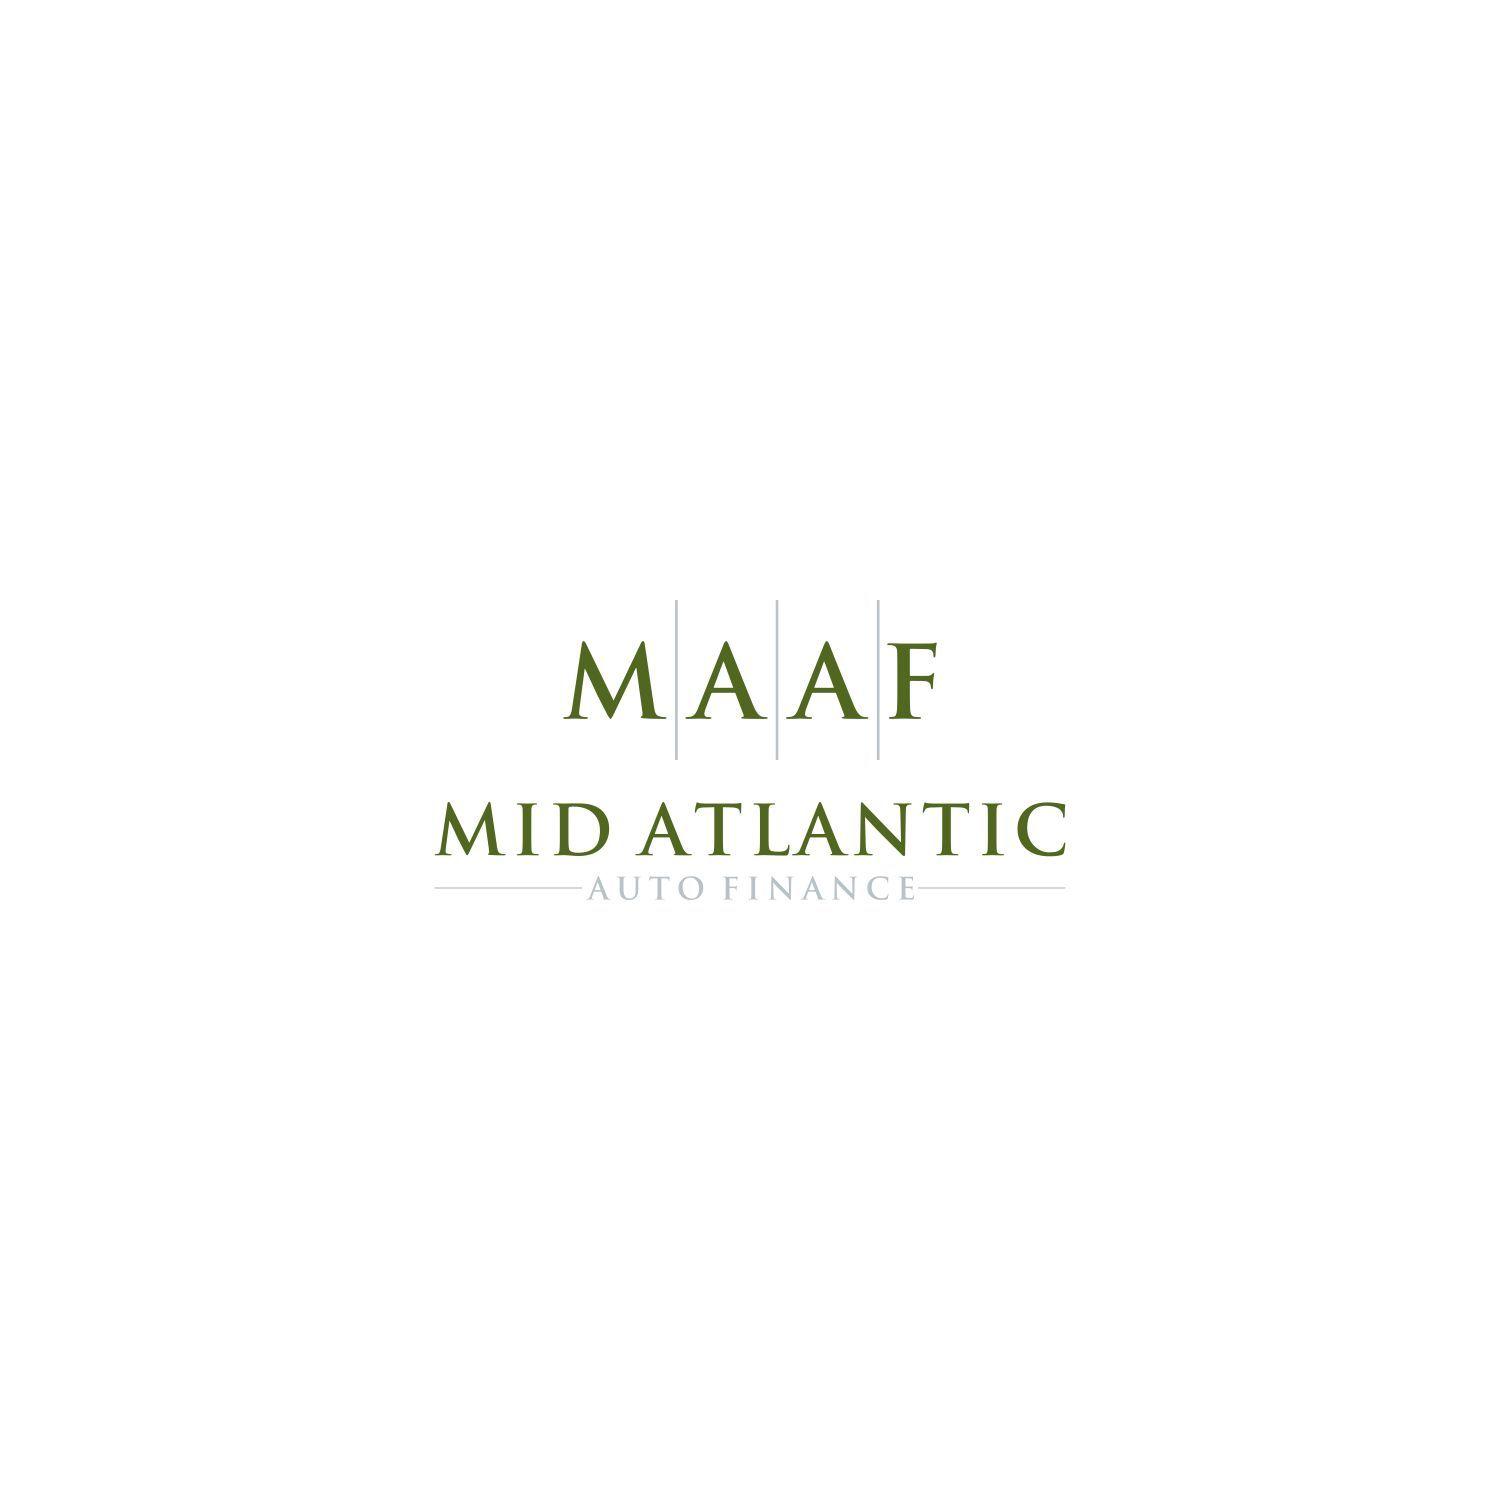 Auto Finance Logo - Elegant, Playful, Finance Logo Design for Mid Atlantic Auto Finance ...